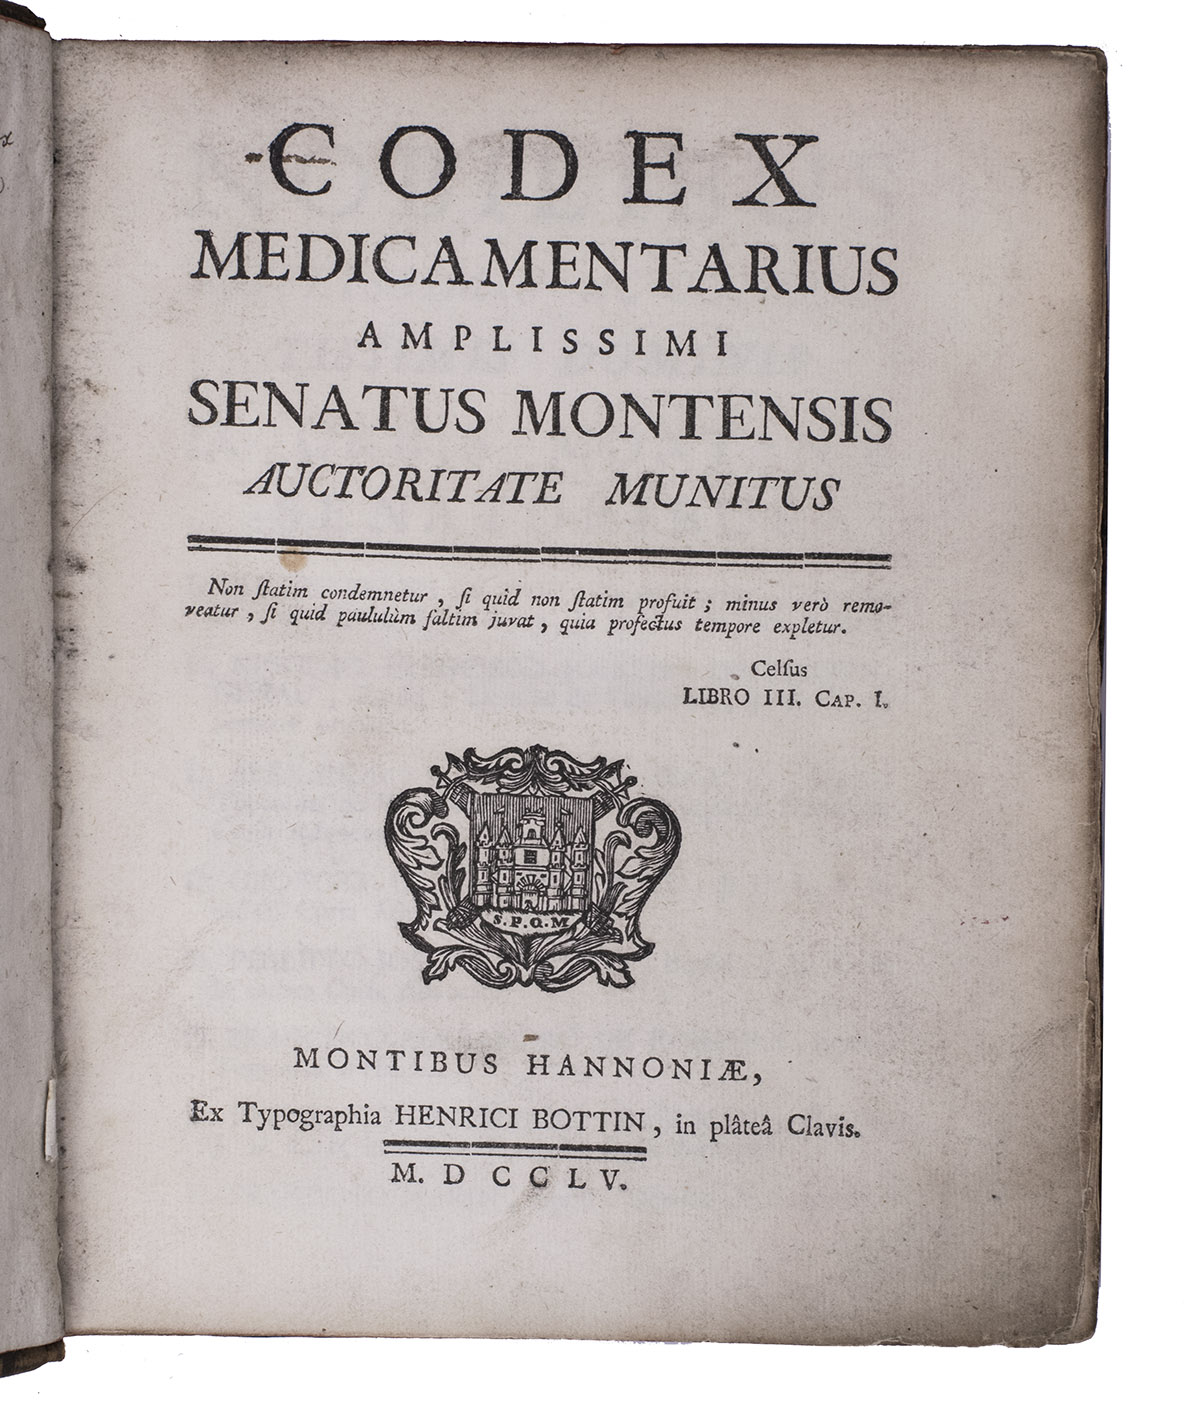 [MONS - PHARMACOPOEIA]. - Codex medicamentarius amplissimi senatus Montensis auctoritate munitus.Mons, Henri Bottin, 1755. 4to. Contemporary calf, richly gold-tooled spine.